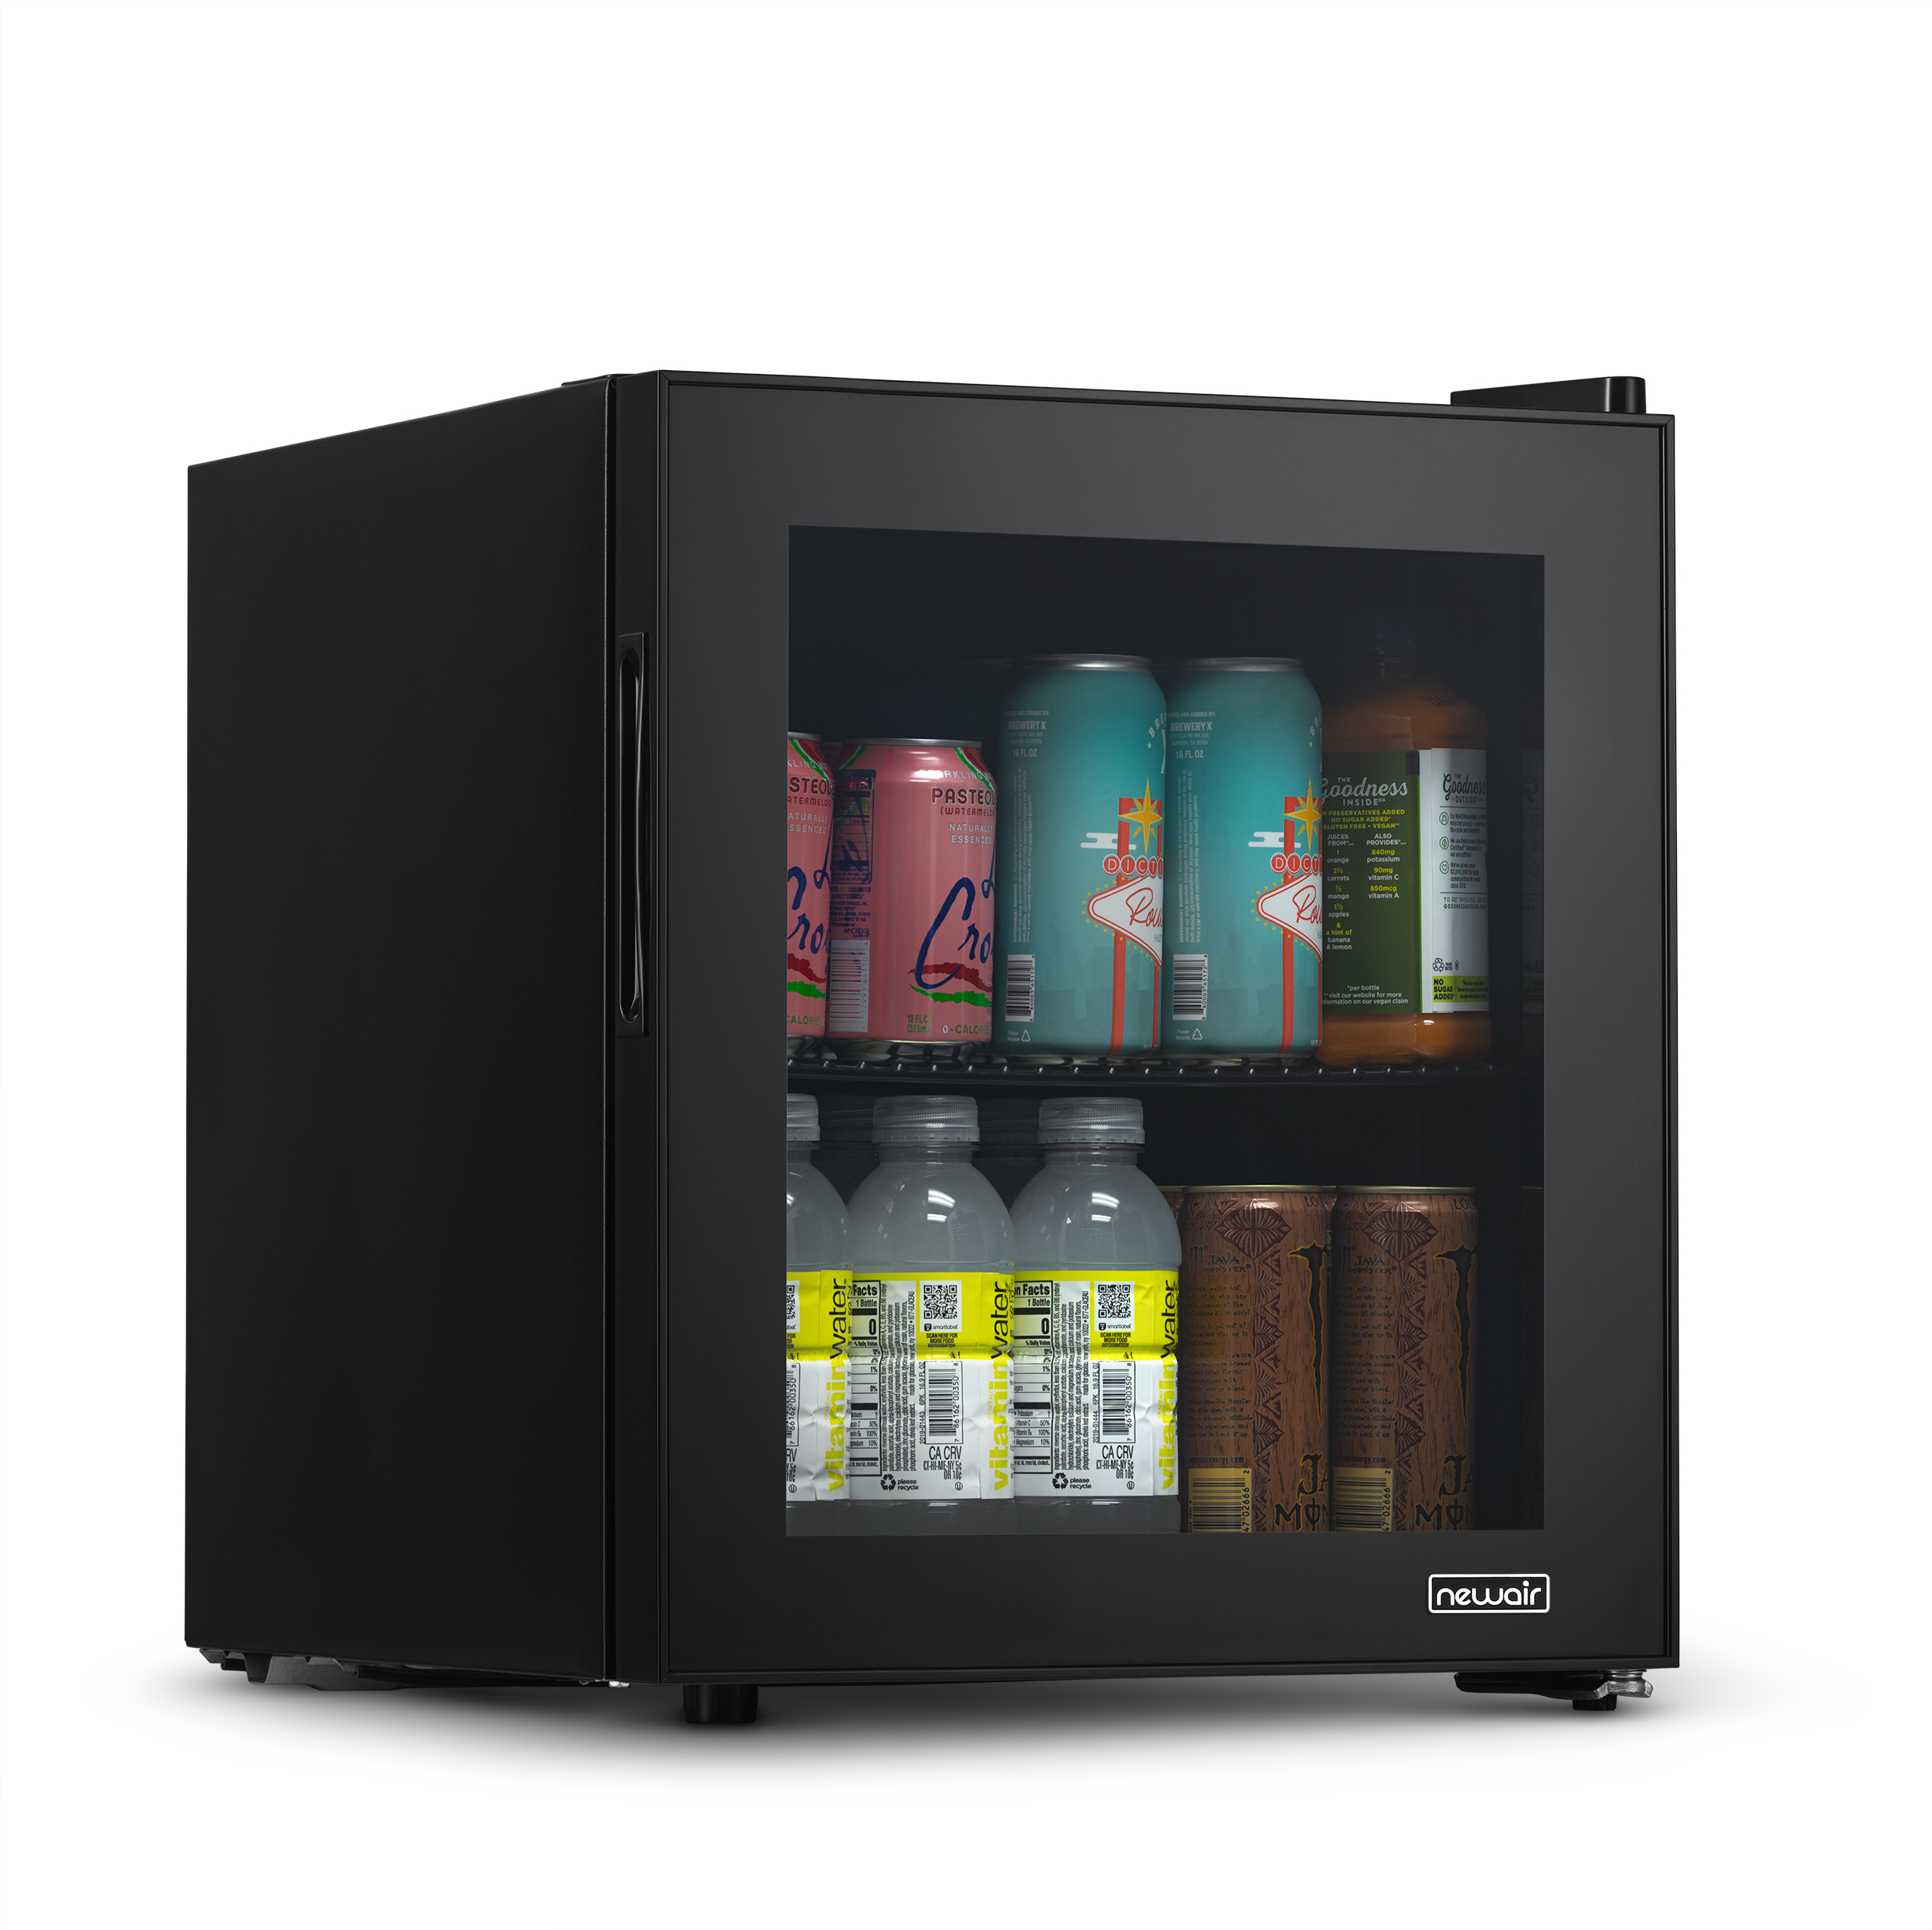 NewAir Black 60-Can Beverage Refrigerator with Glass Door, Freestanding - image 1 of 10